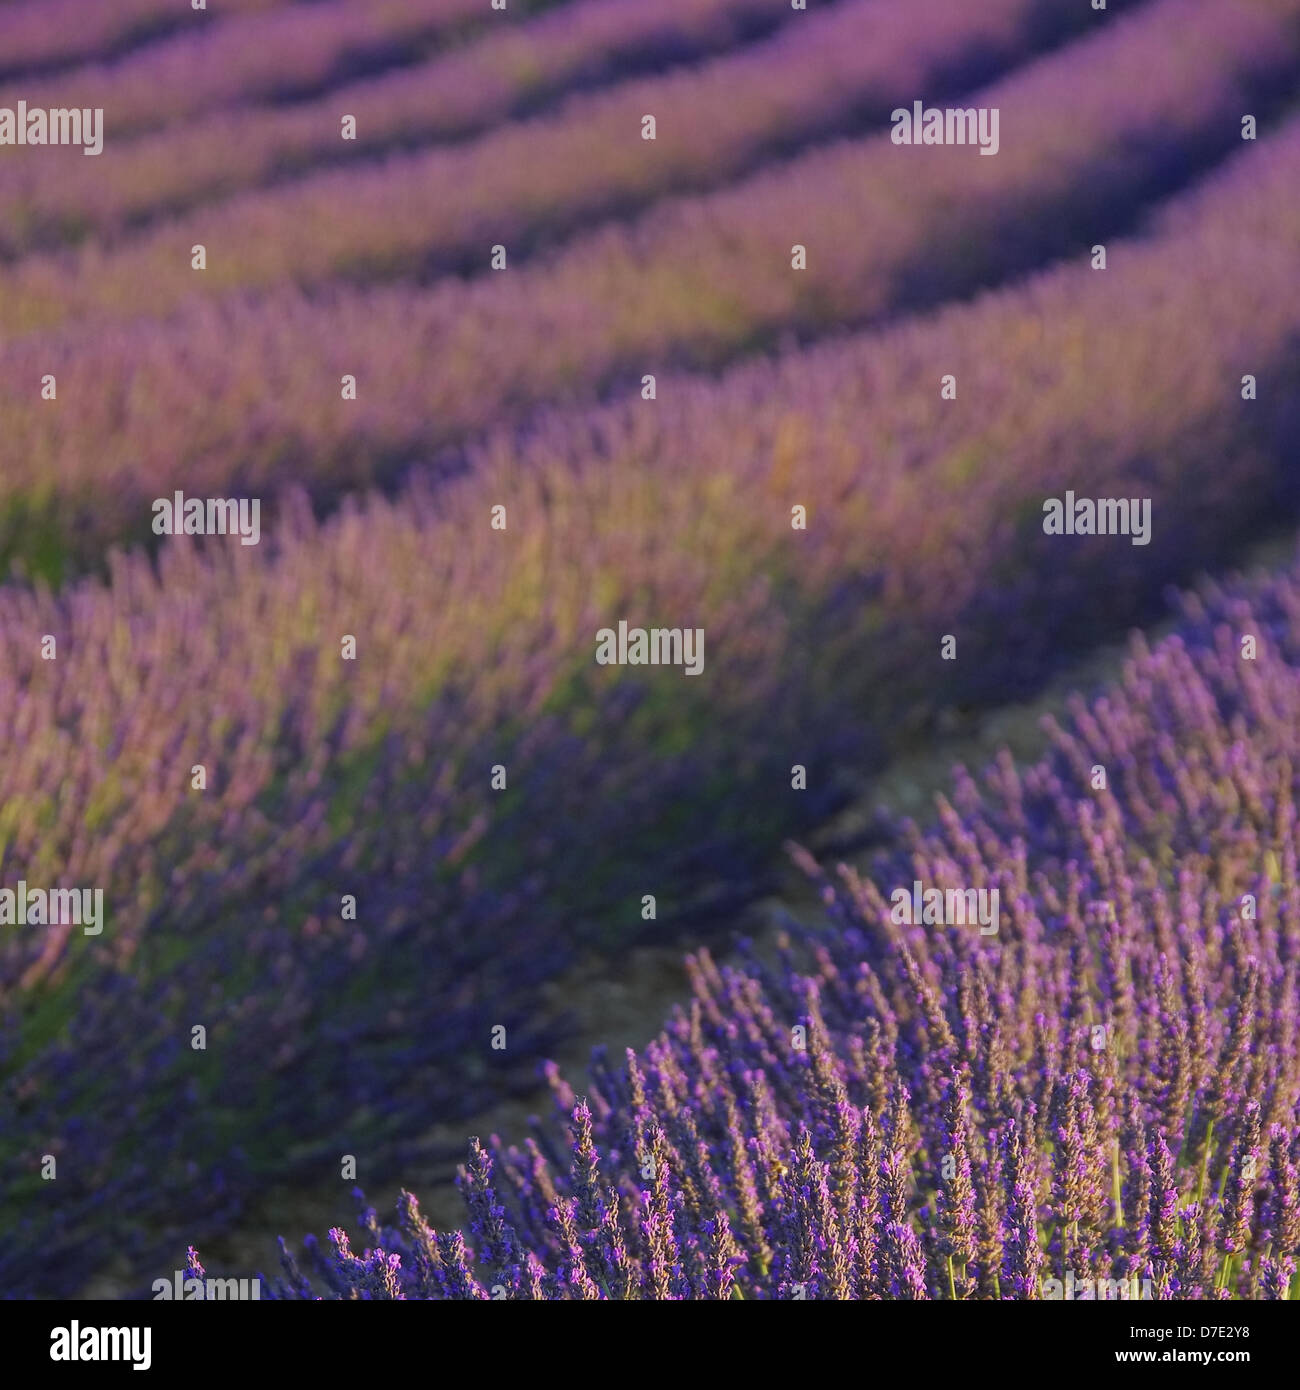 Lavendelfeld - lavender field 97 Stock Photo